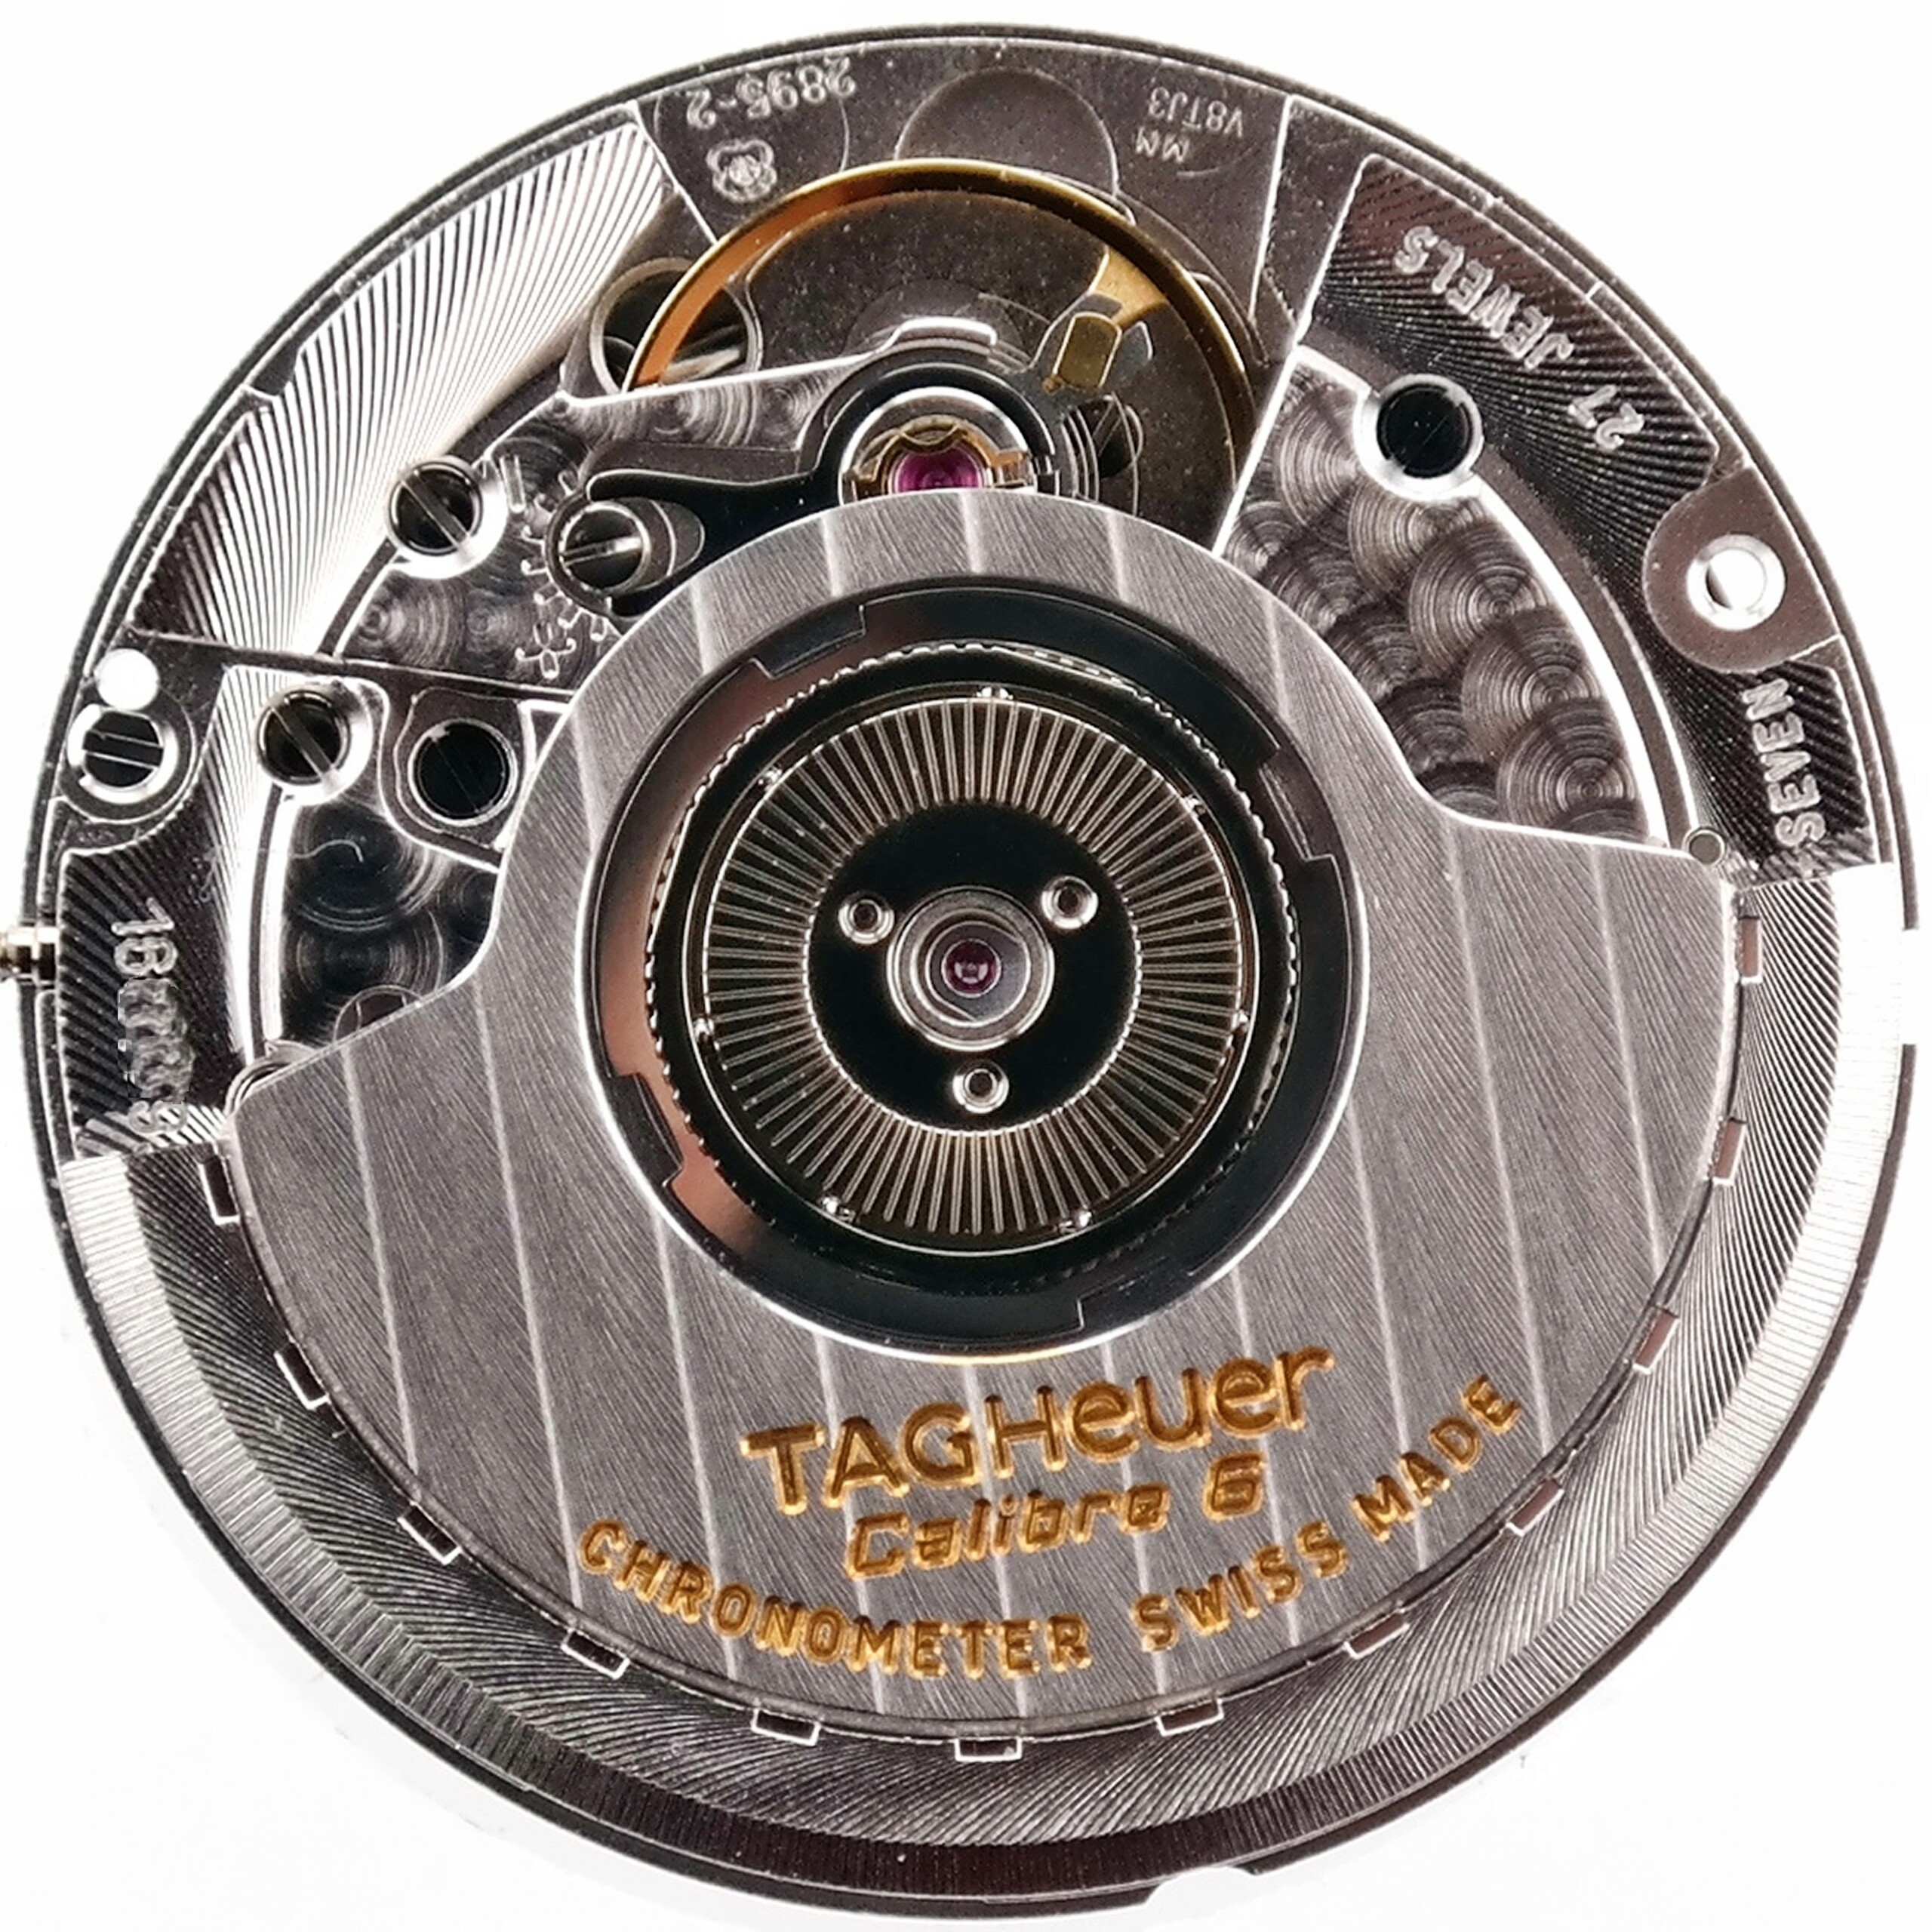 TAG Heuer - Calibre 6 - ETA 2895-2 - Automatic Watch Movement Chronometer